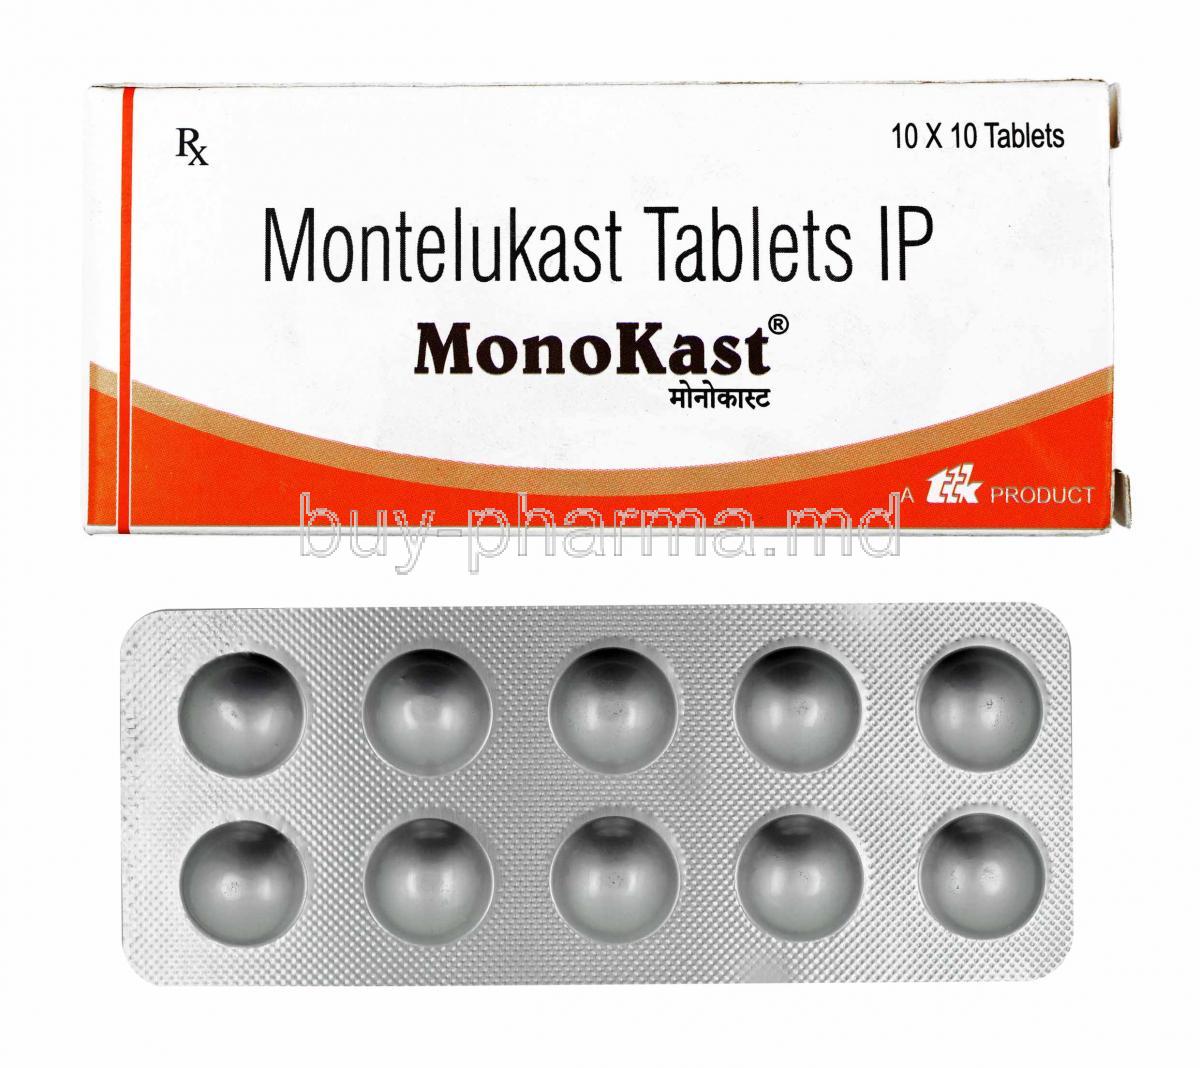 Monokast, Montelukast box and tablets